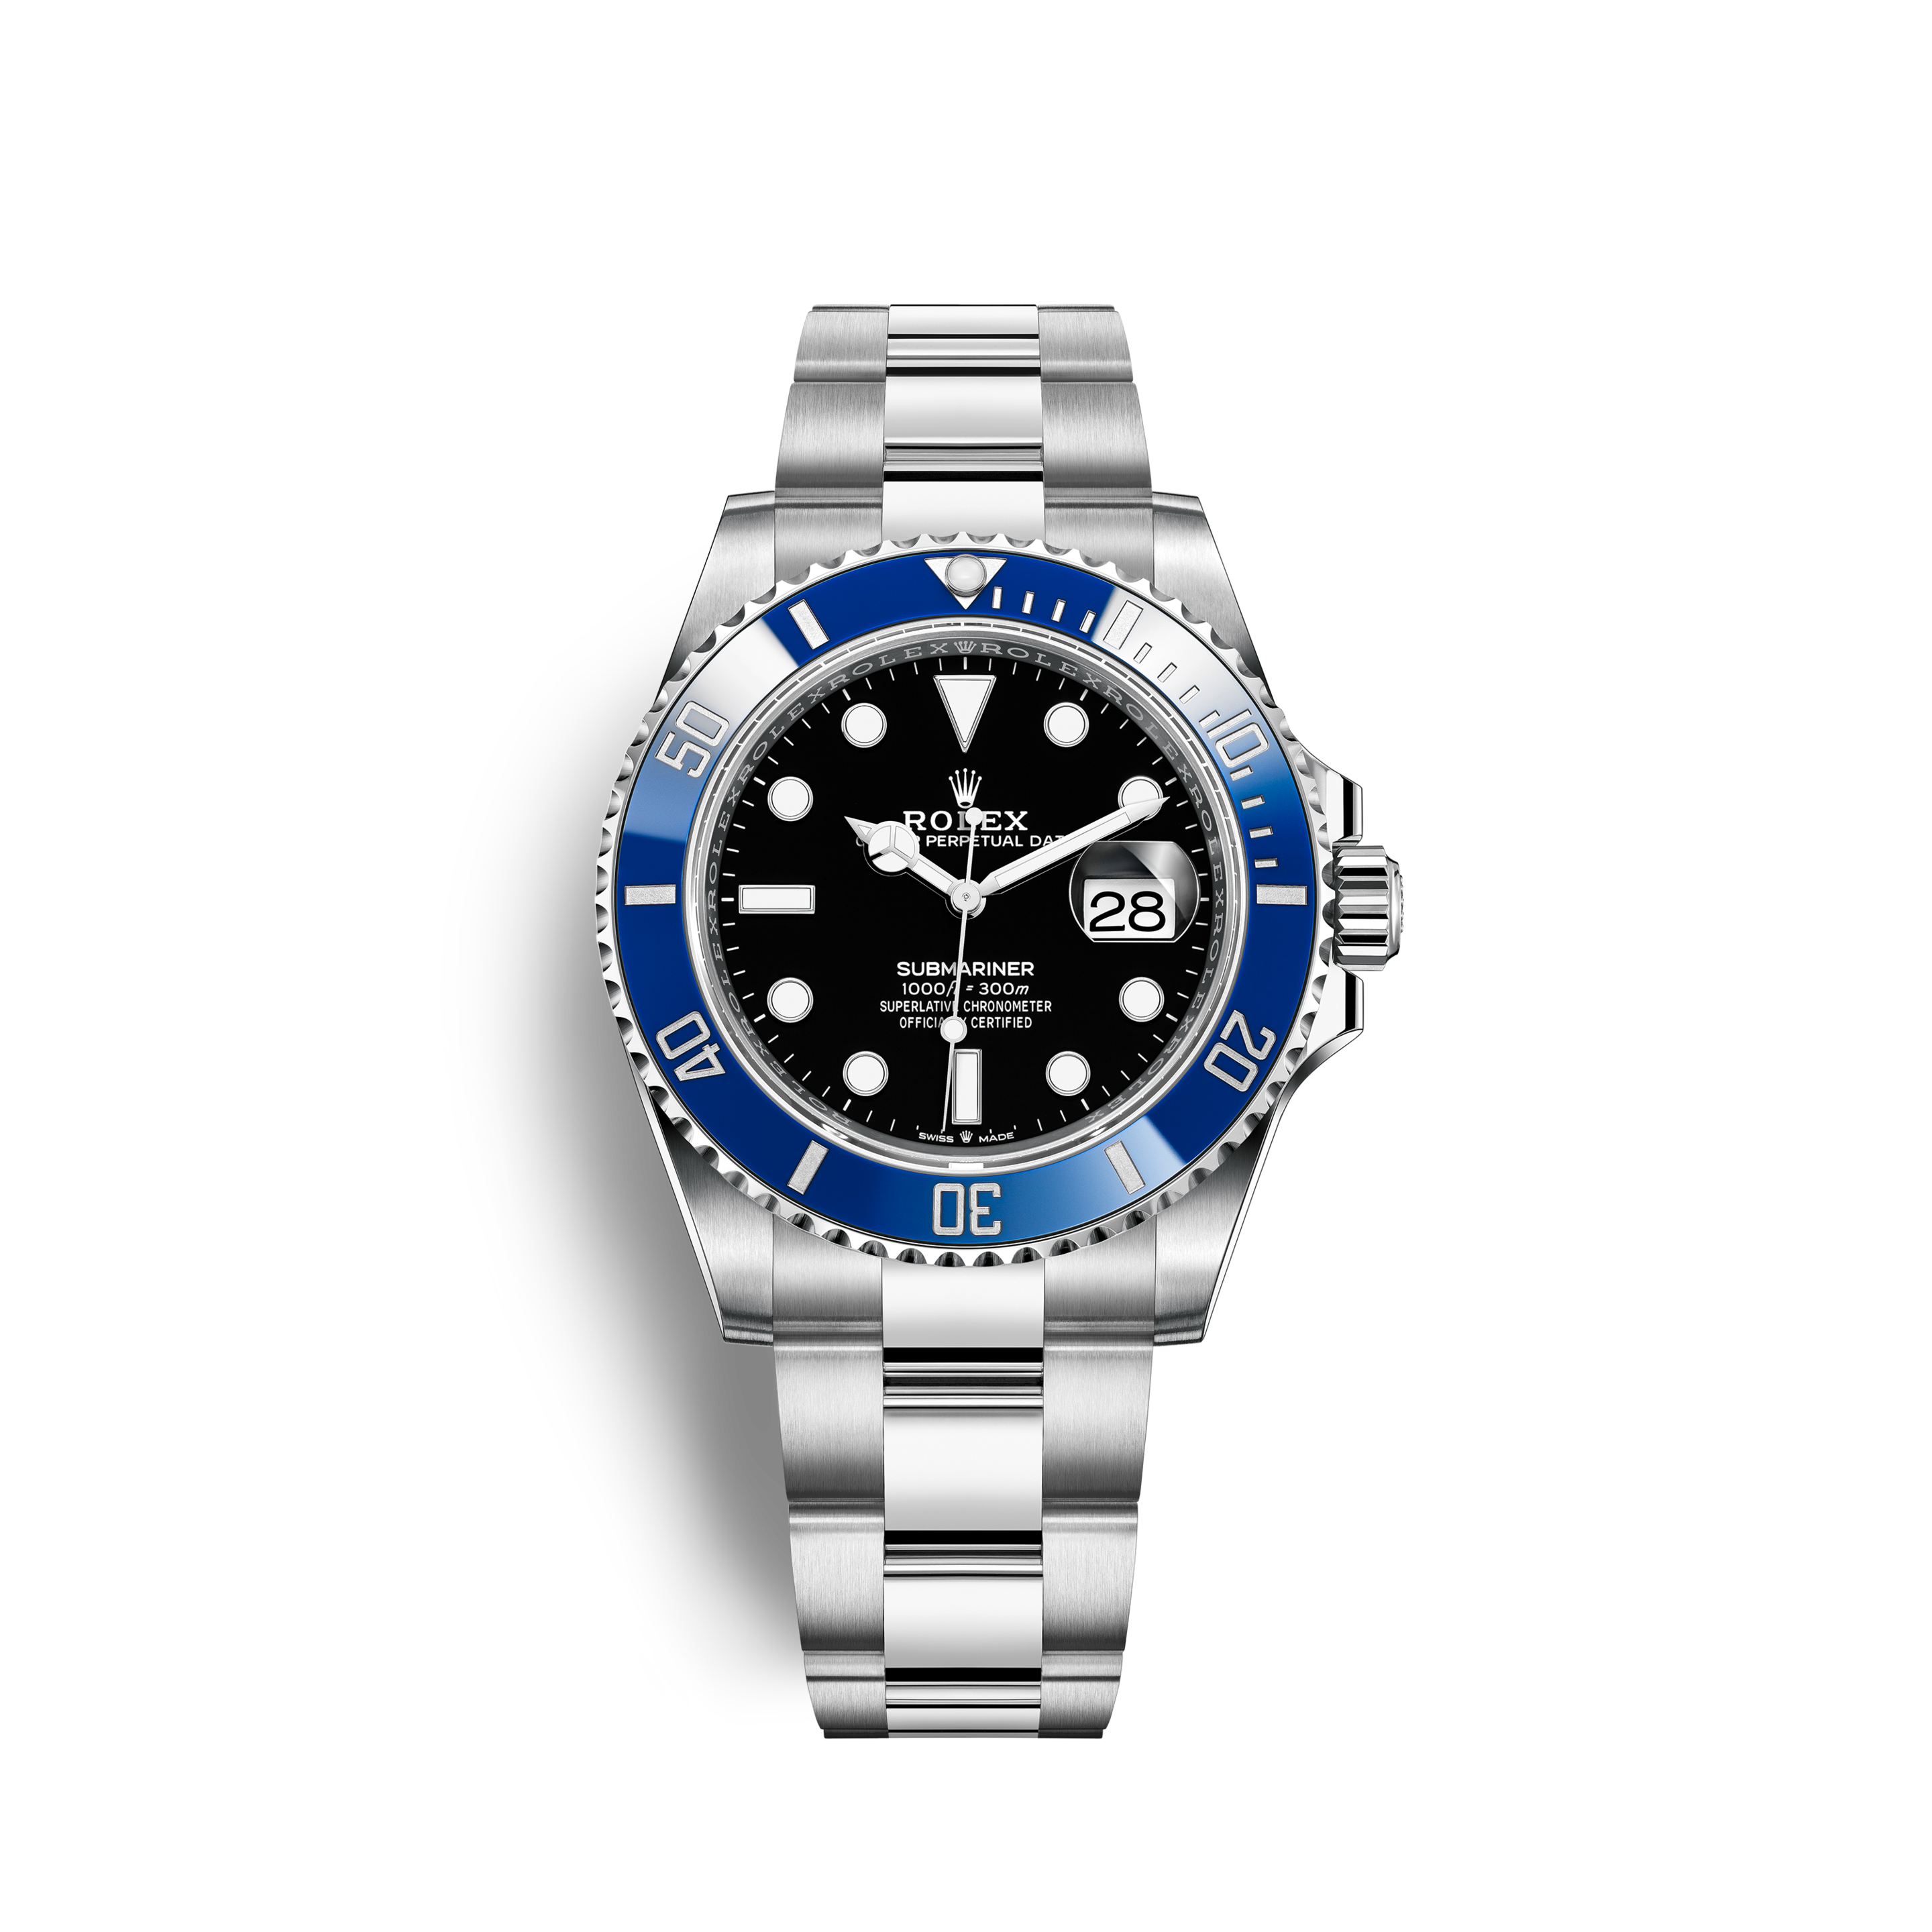 Часы Submariner компании Rolex – Эталон 